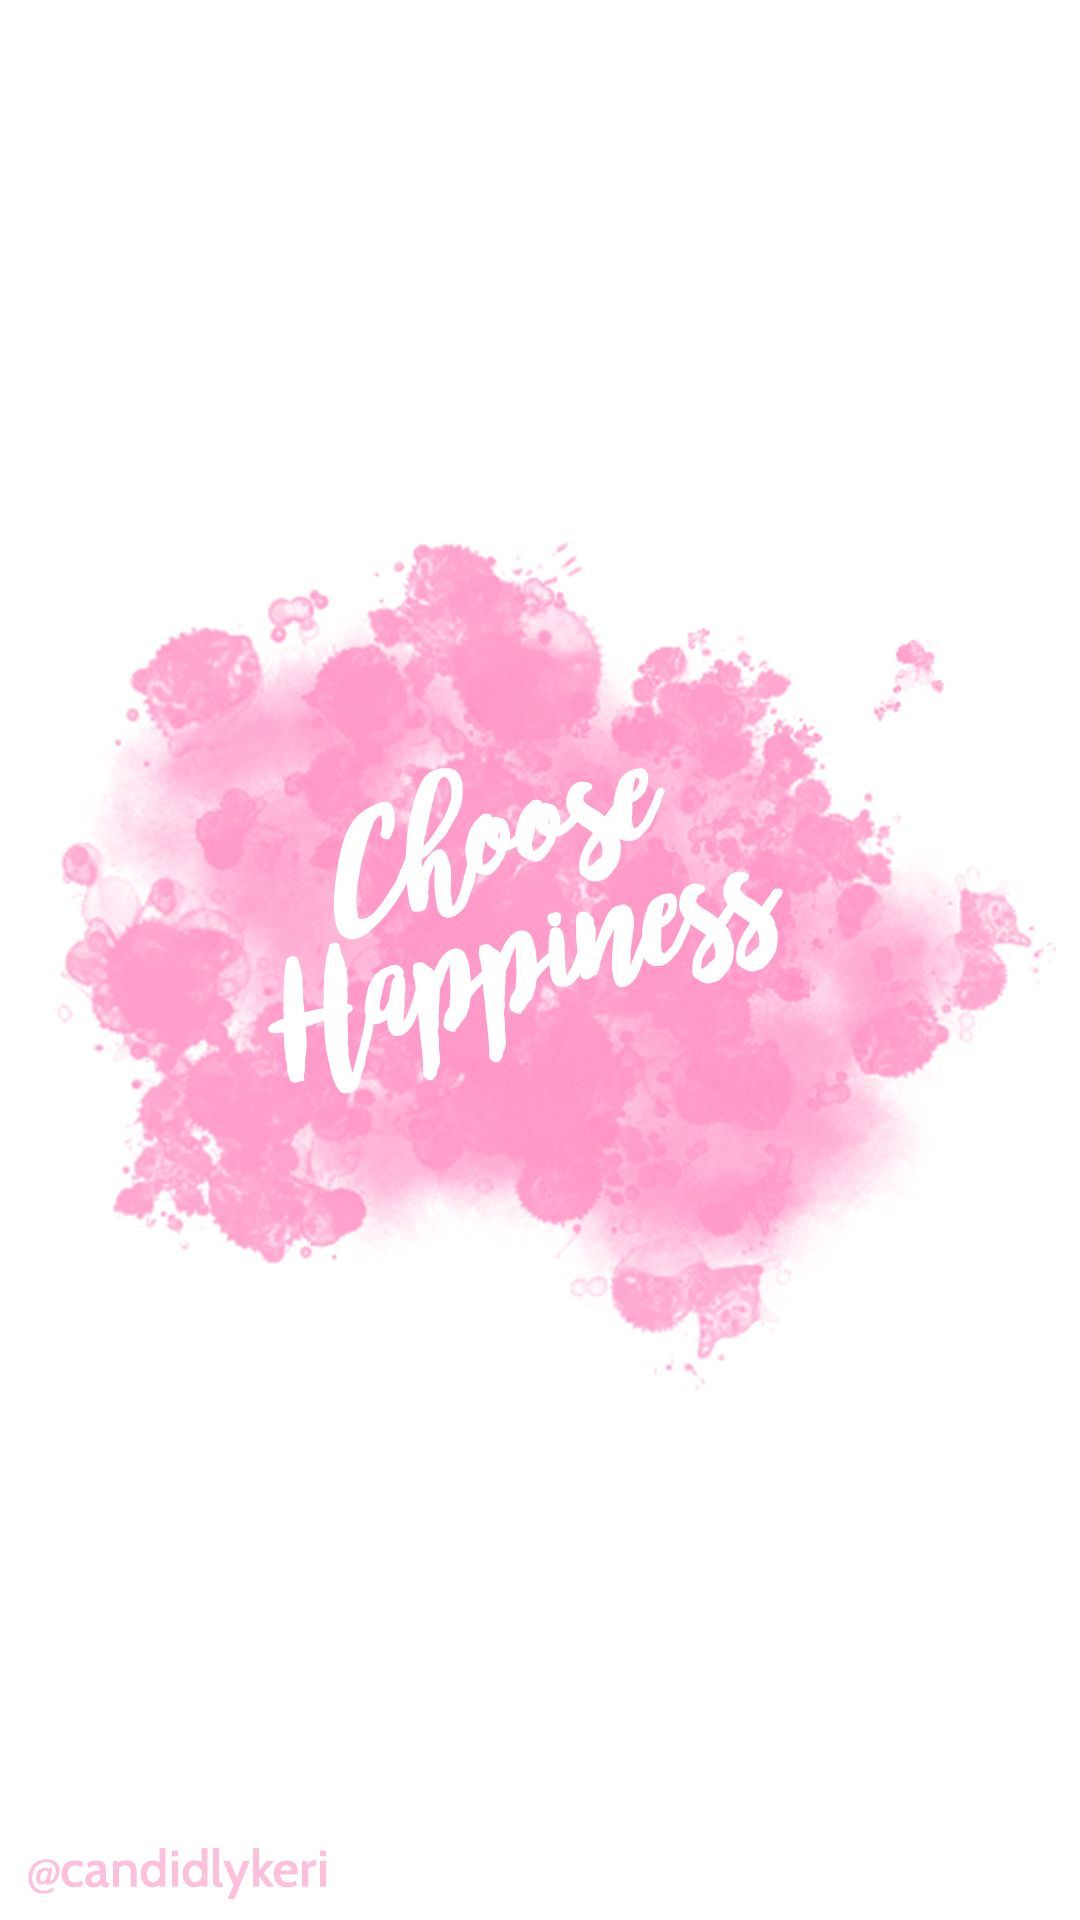 Choose Happiness quote pink splatter paint watercolor wallpaper